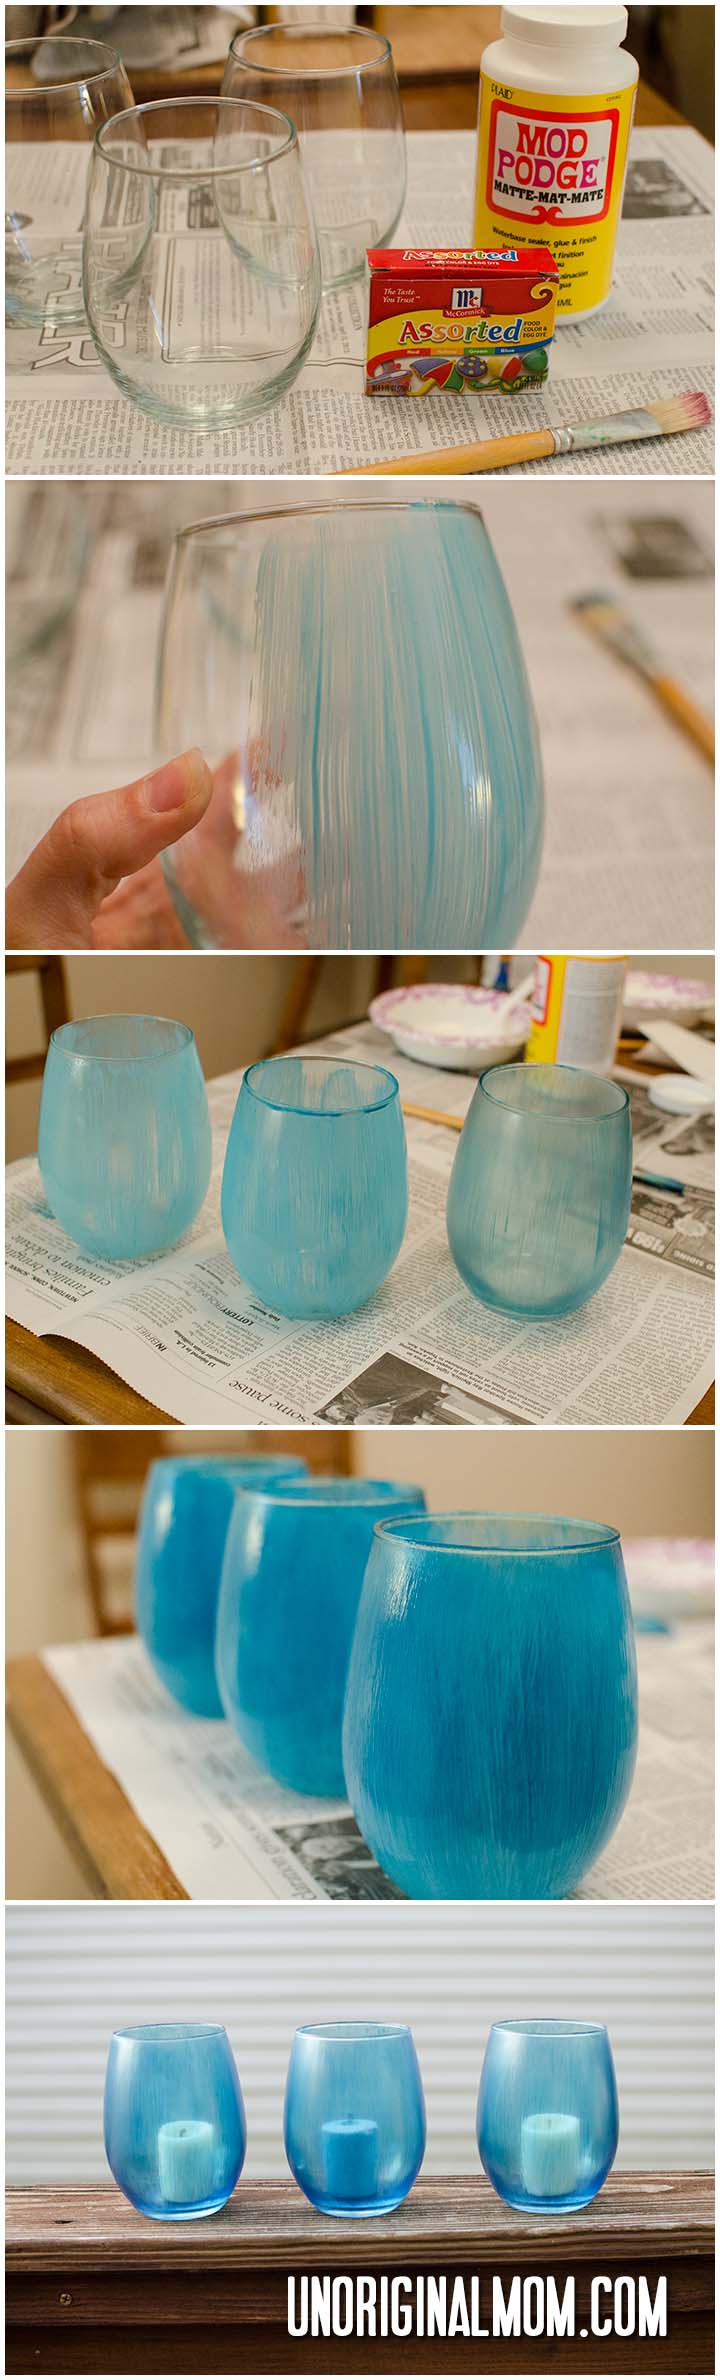 How to make painted glass using mod podge and food coloring. So easy! | unOriginalMom.com